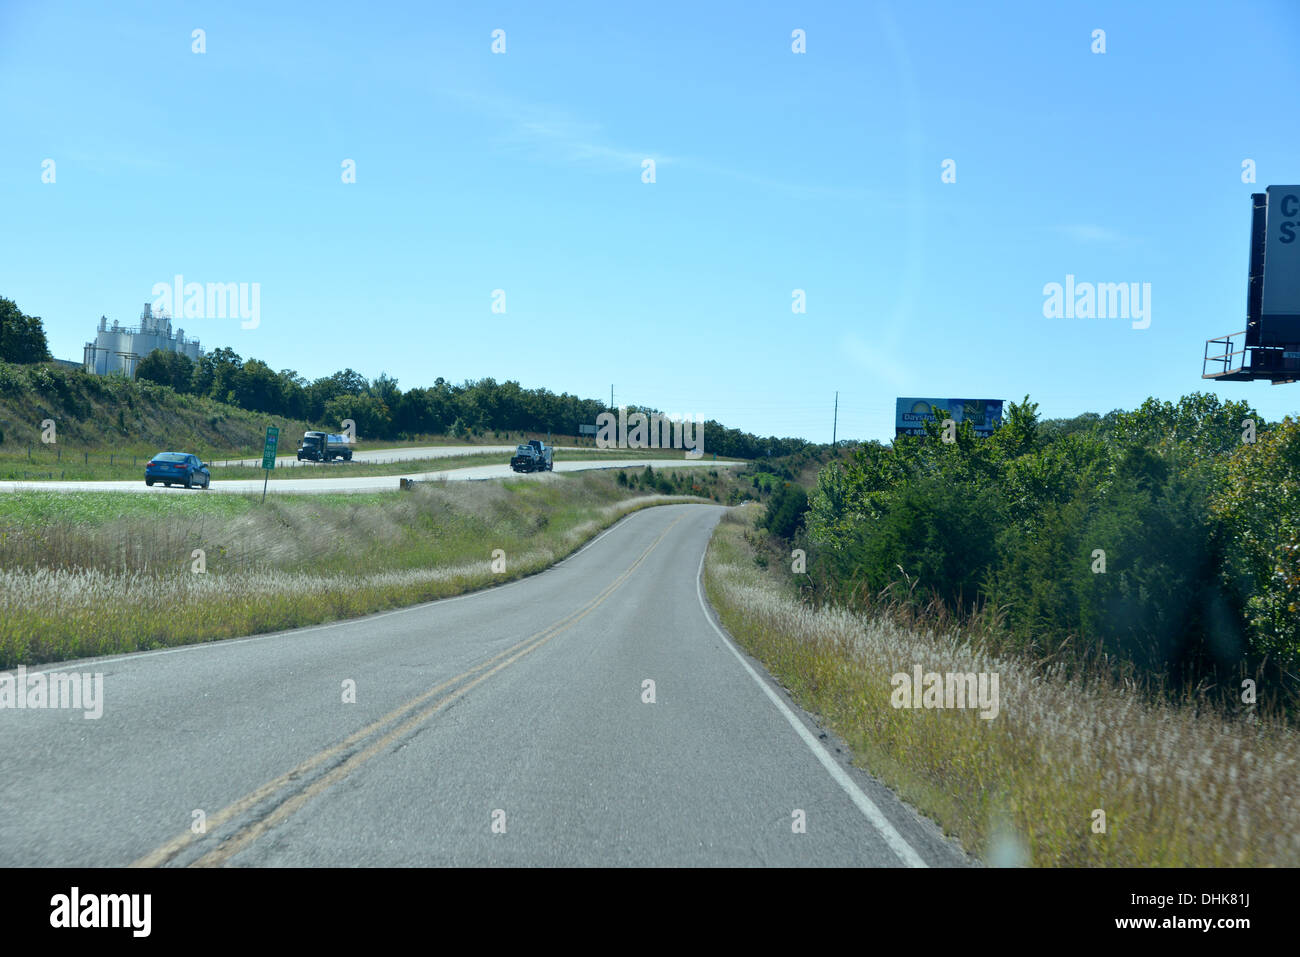 La vieja ruta 66 Ruta de 2 carriles se ejecuta junto con la nueva autopista interestatal 44 oeste, construido para la variante de la carretera vieja, en Missouri, EE.UU. Foto de stock